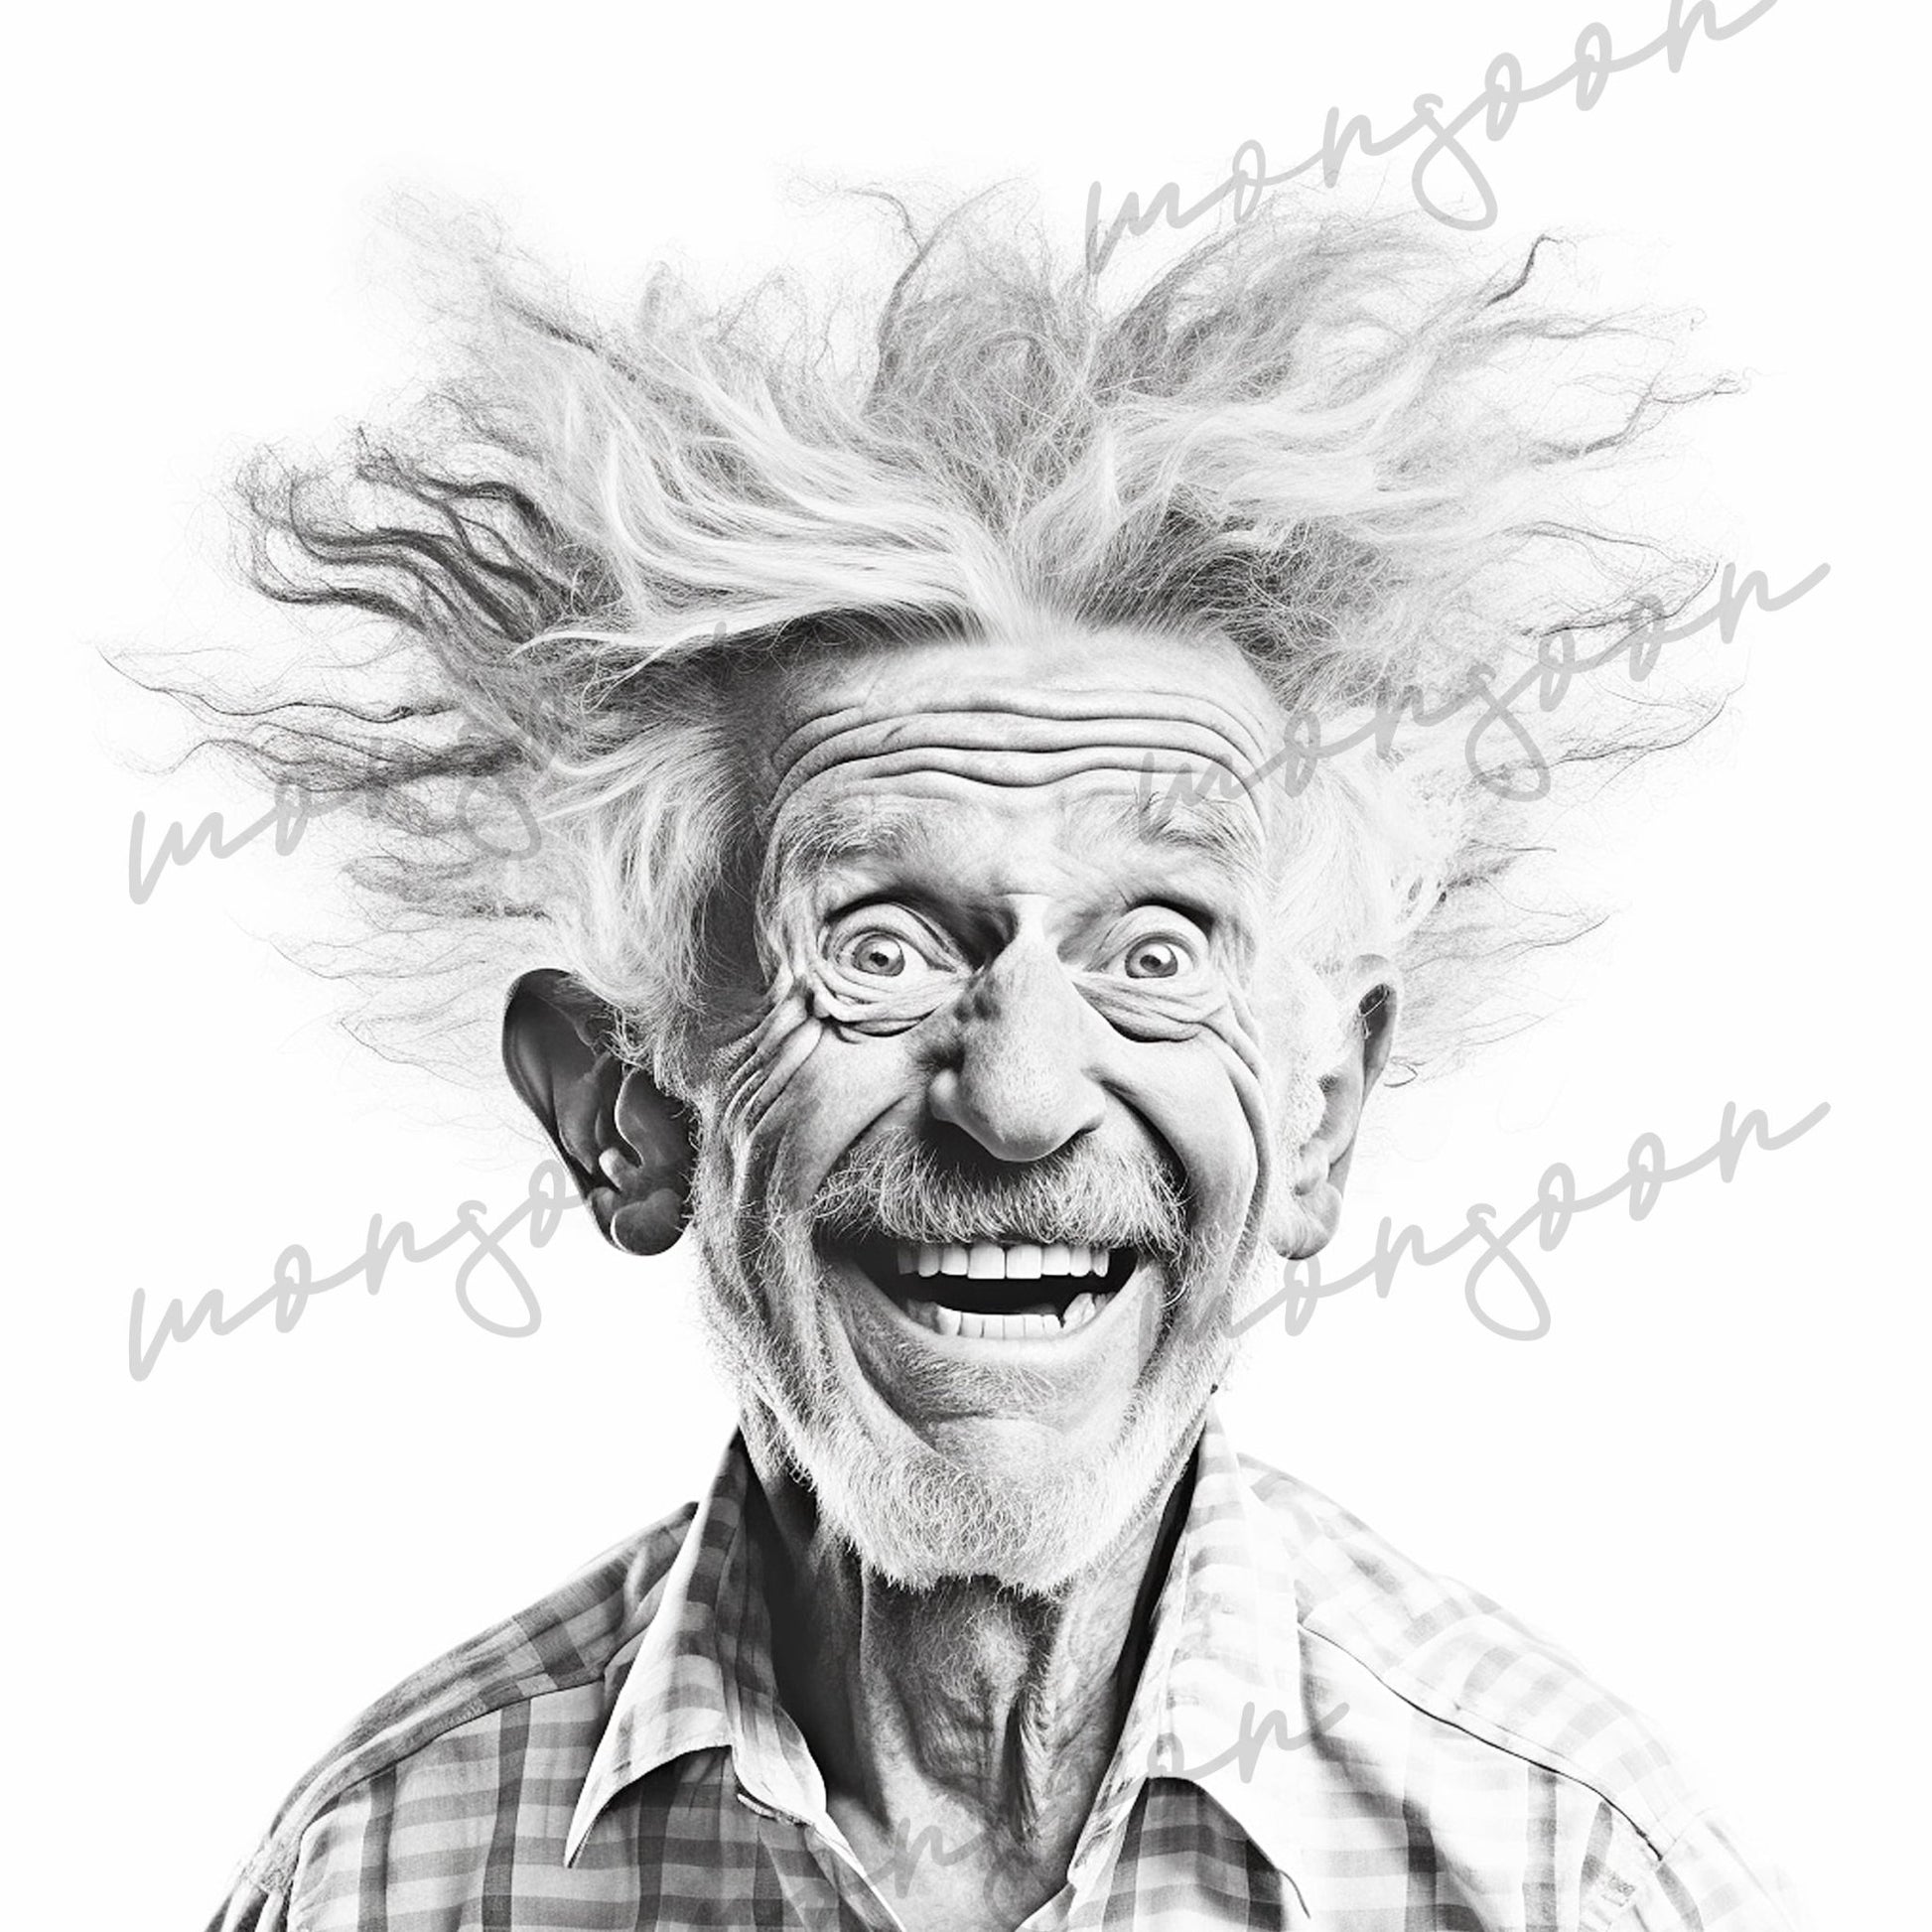 Crazy Grandpas Coloring Book Grayscale (Digital) - Monsoon Publishing USA